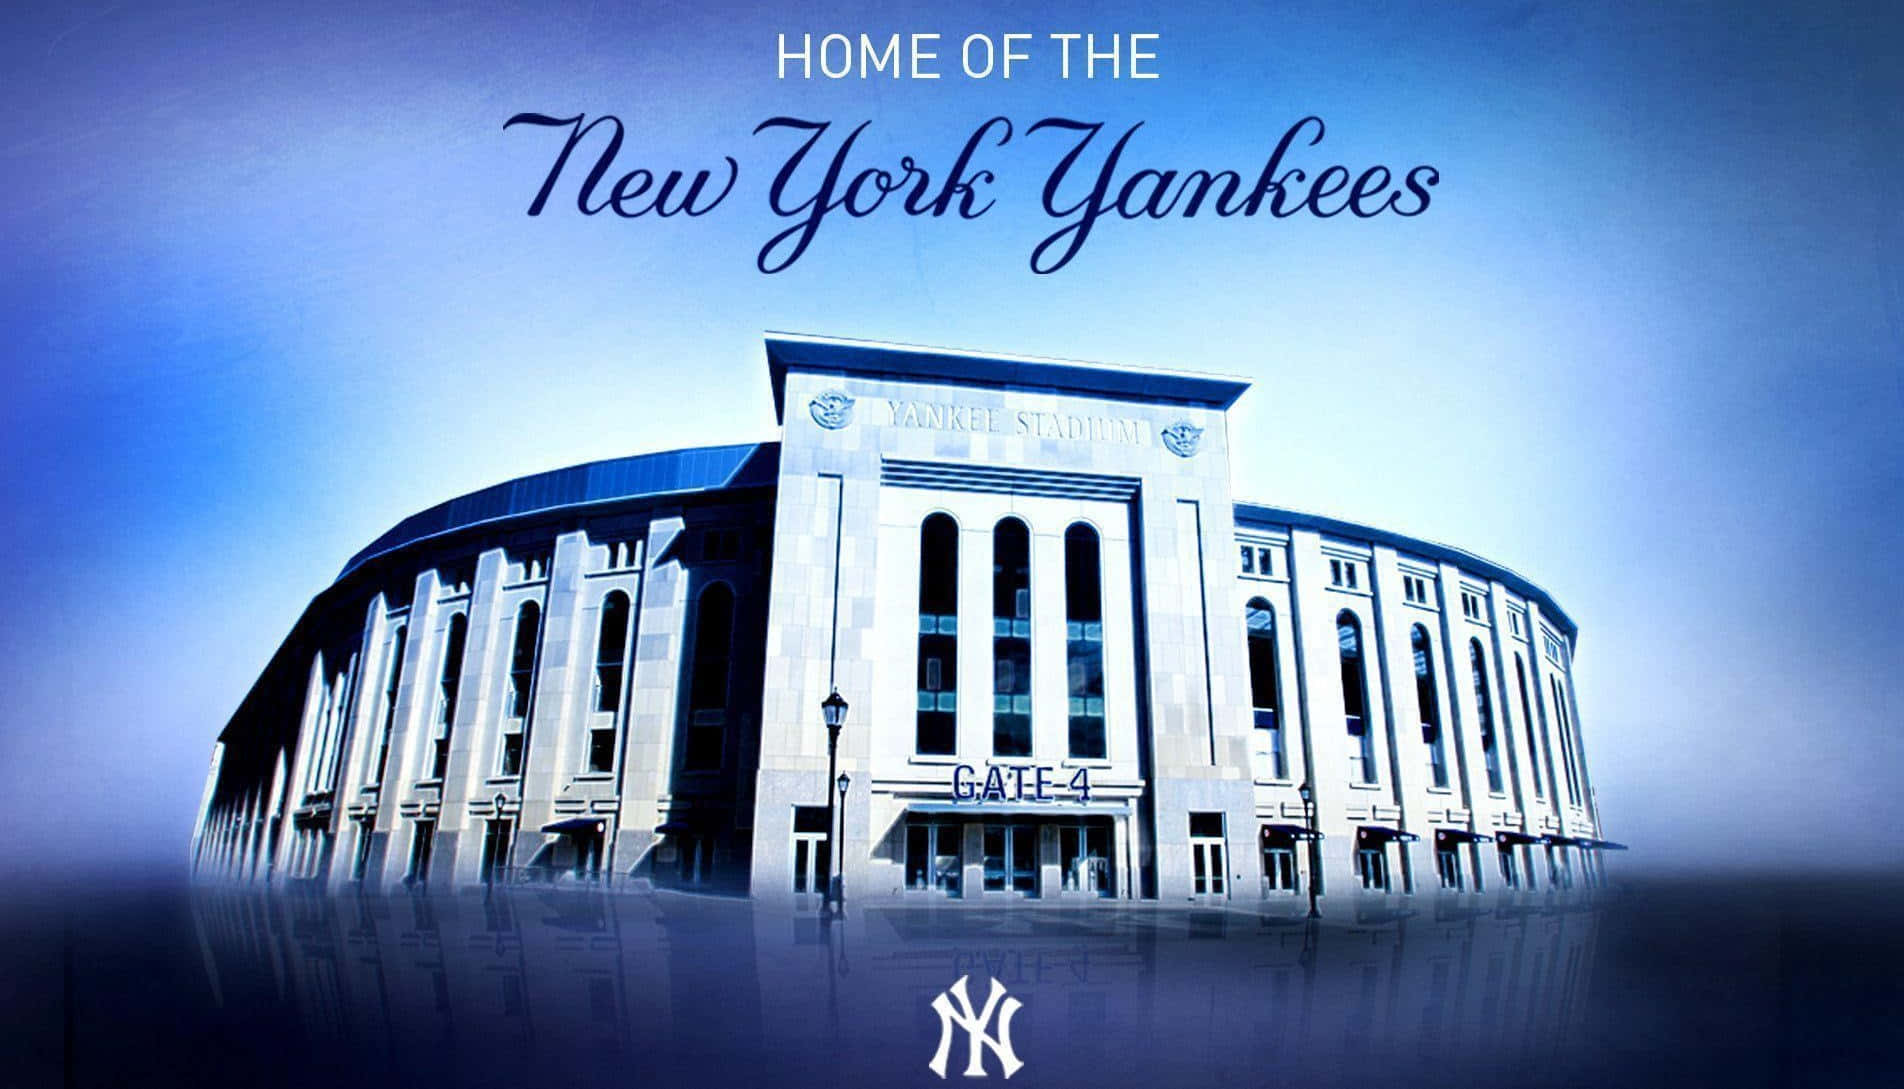 New York Yankees Stadium in all its glory